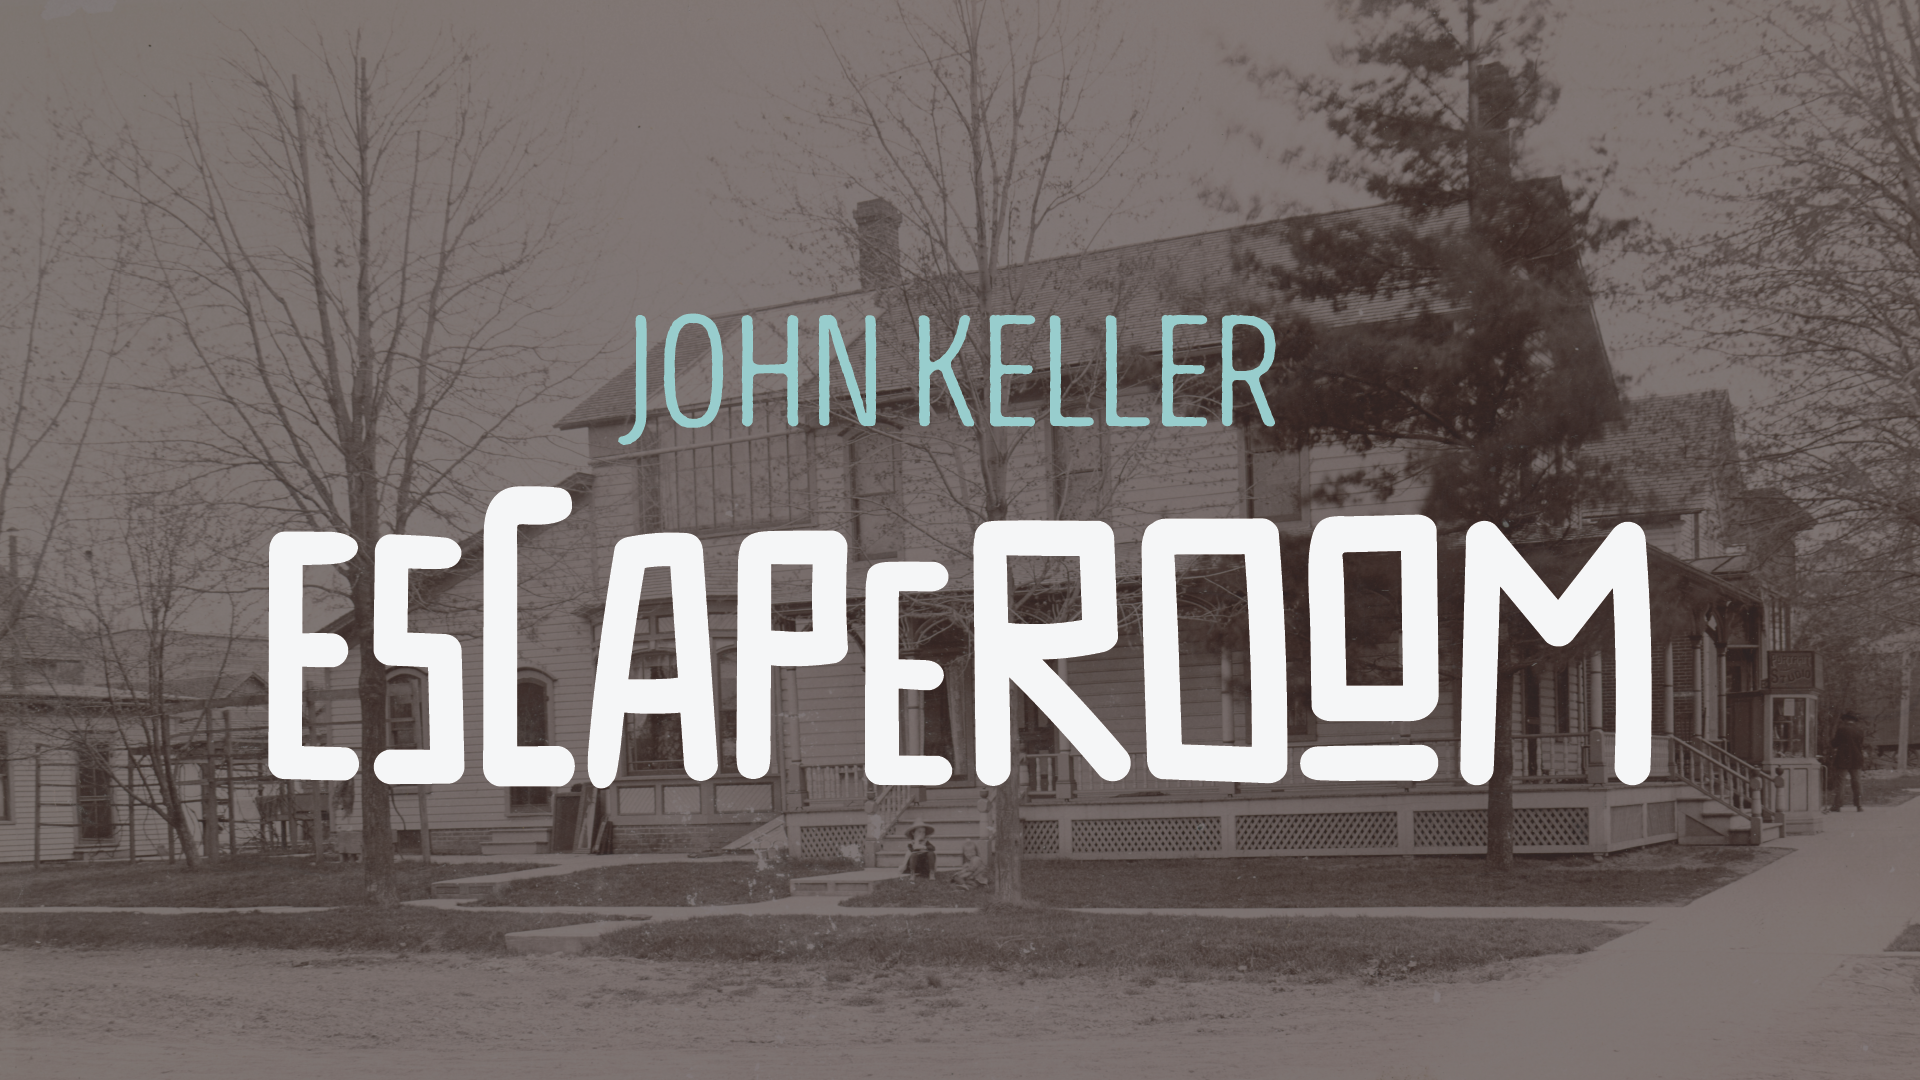 John Keller Escape Room